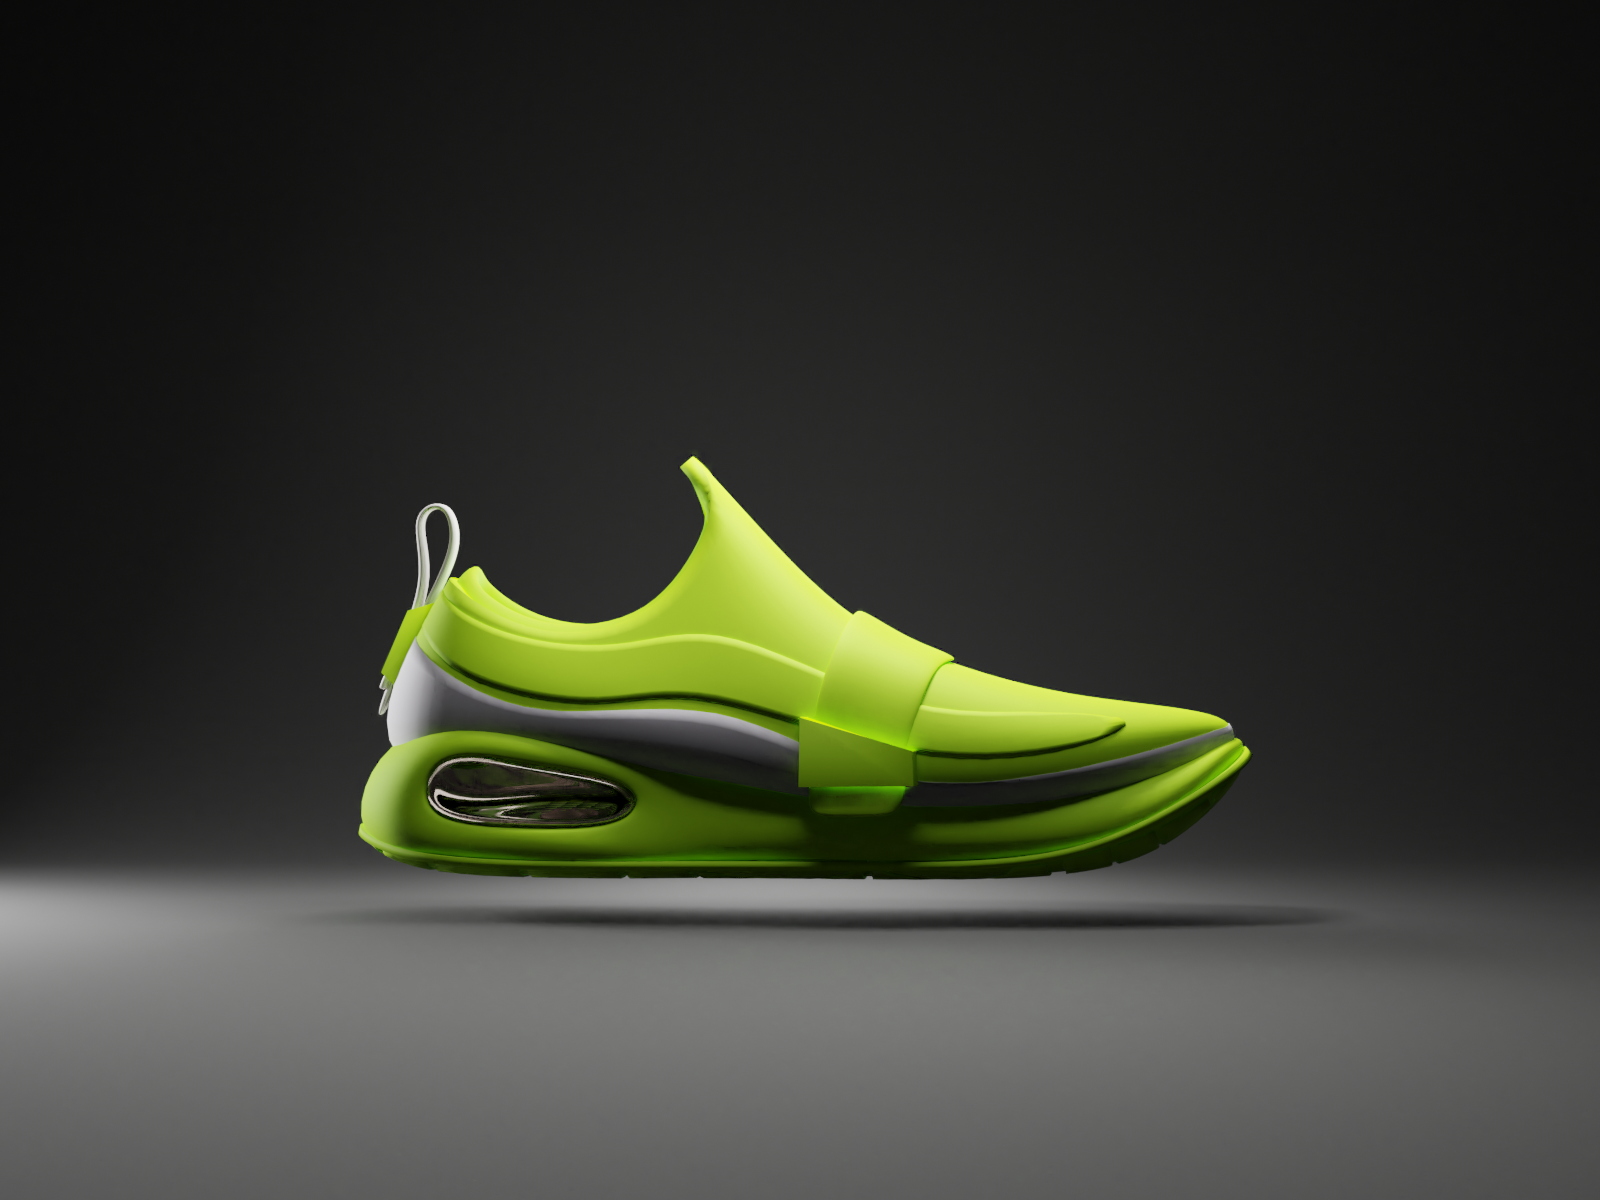 Superlight green shoe by Frank Marklund on Dribbble